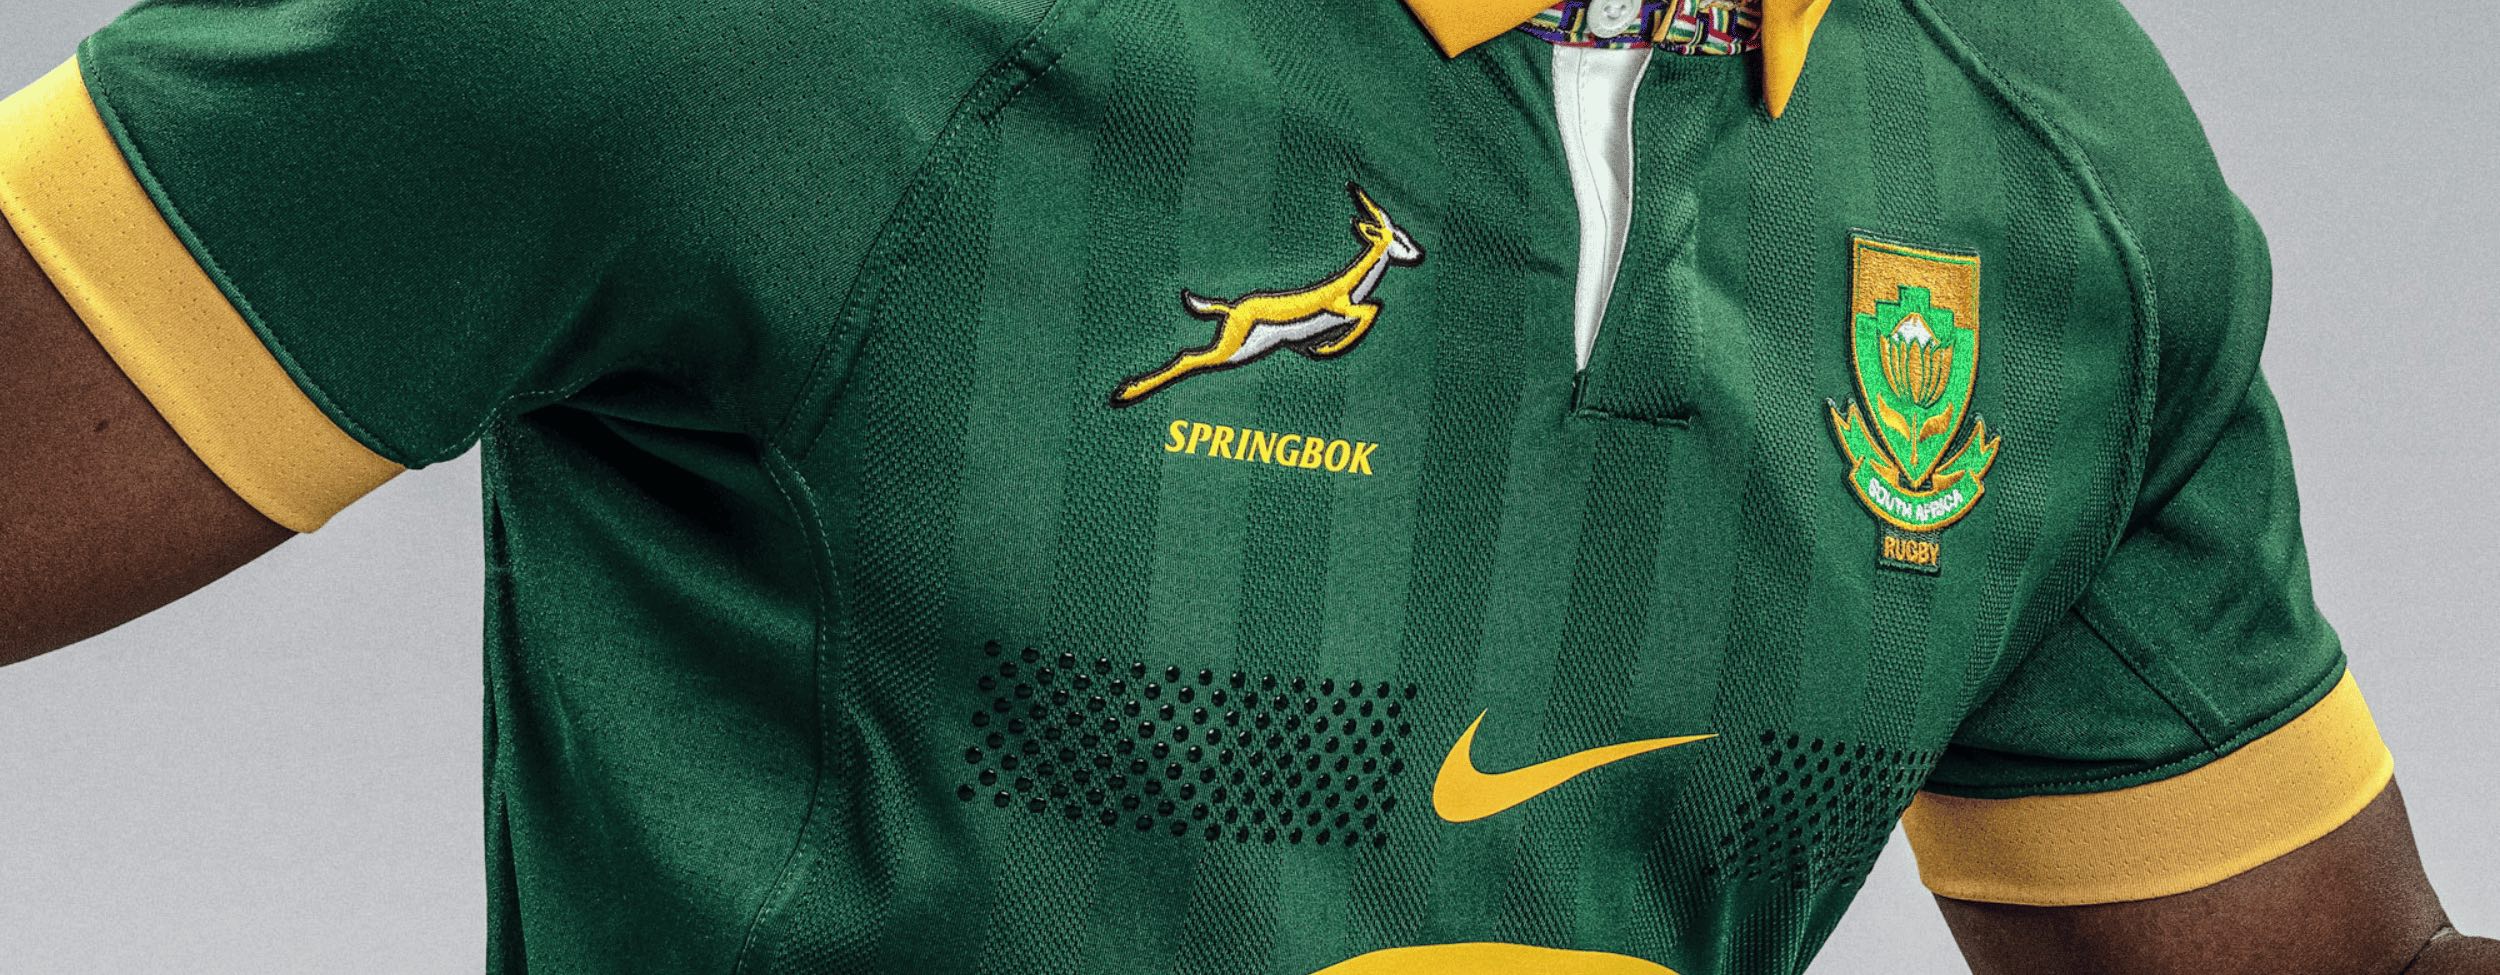 springbok rugby online shop